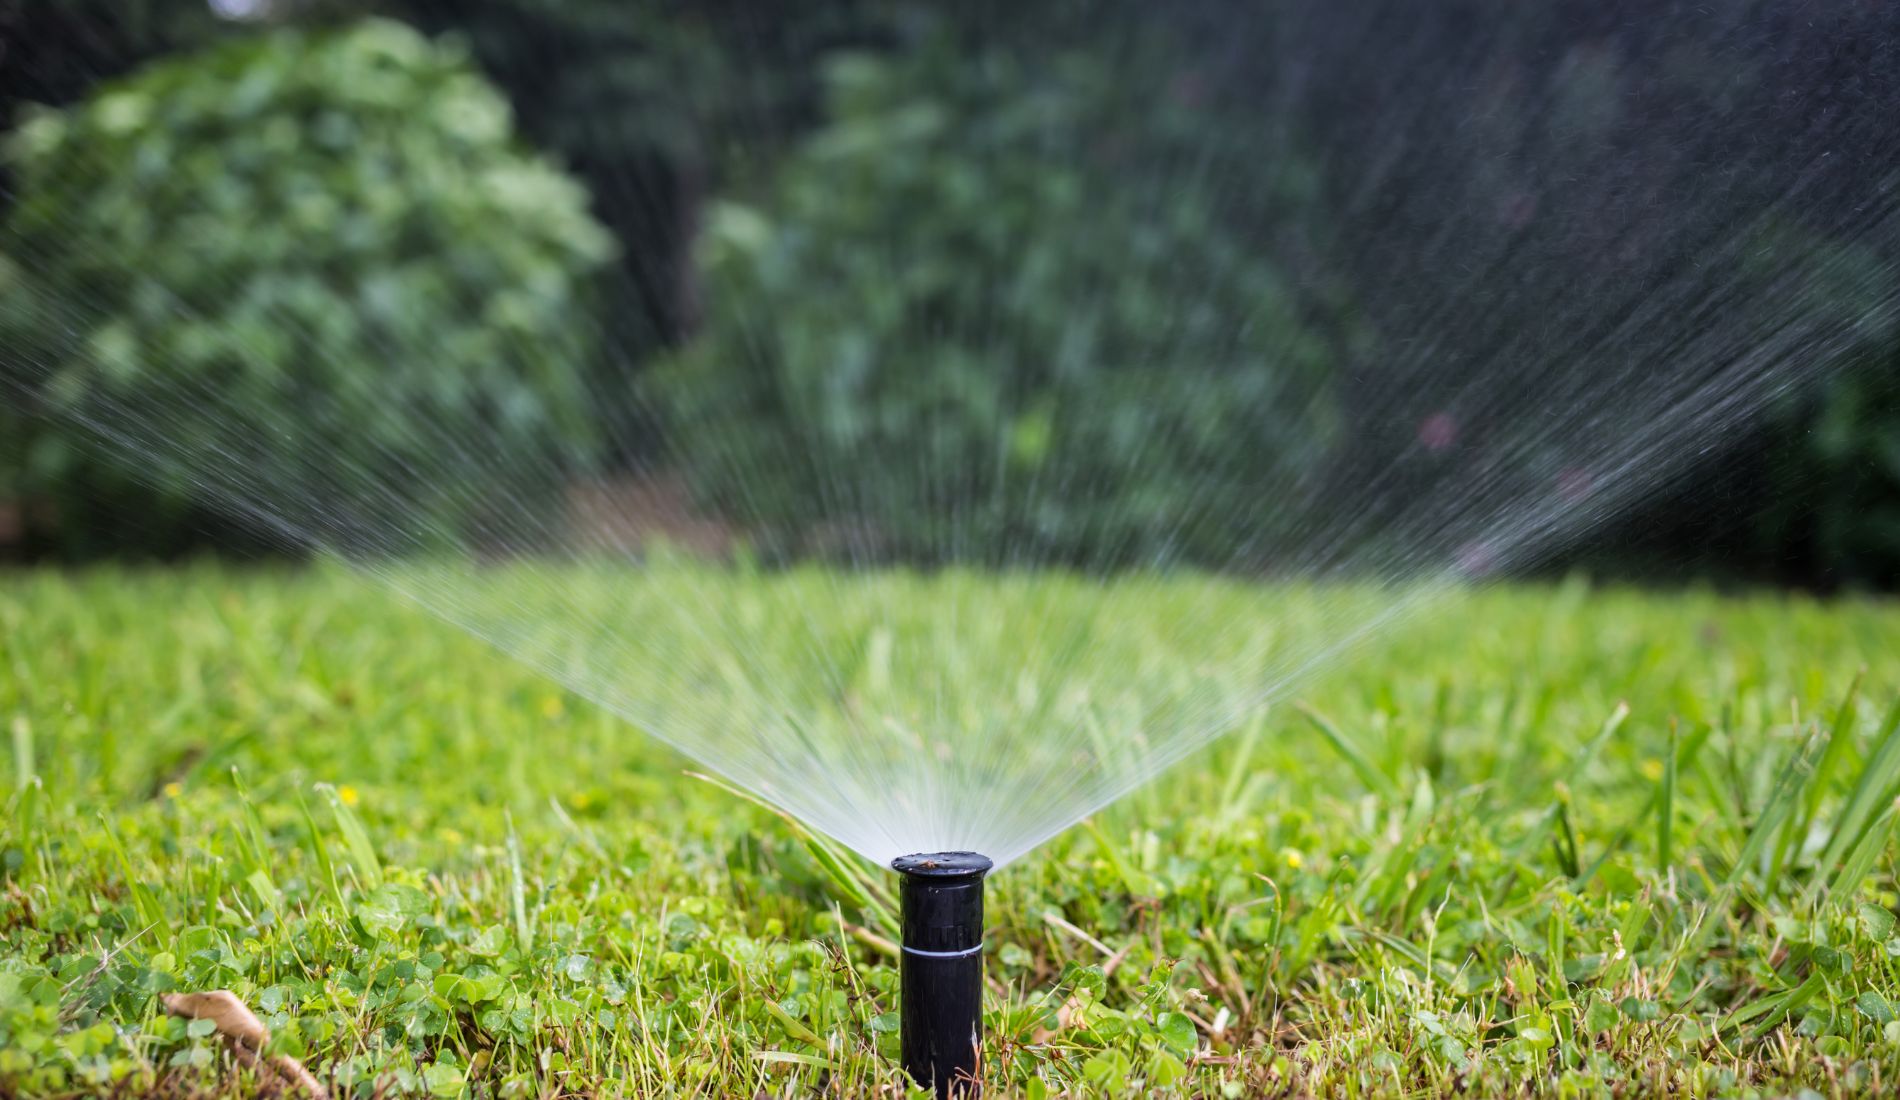 Sprinkler watering the lawn in a park